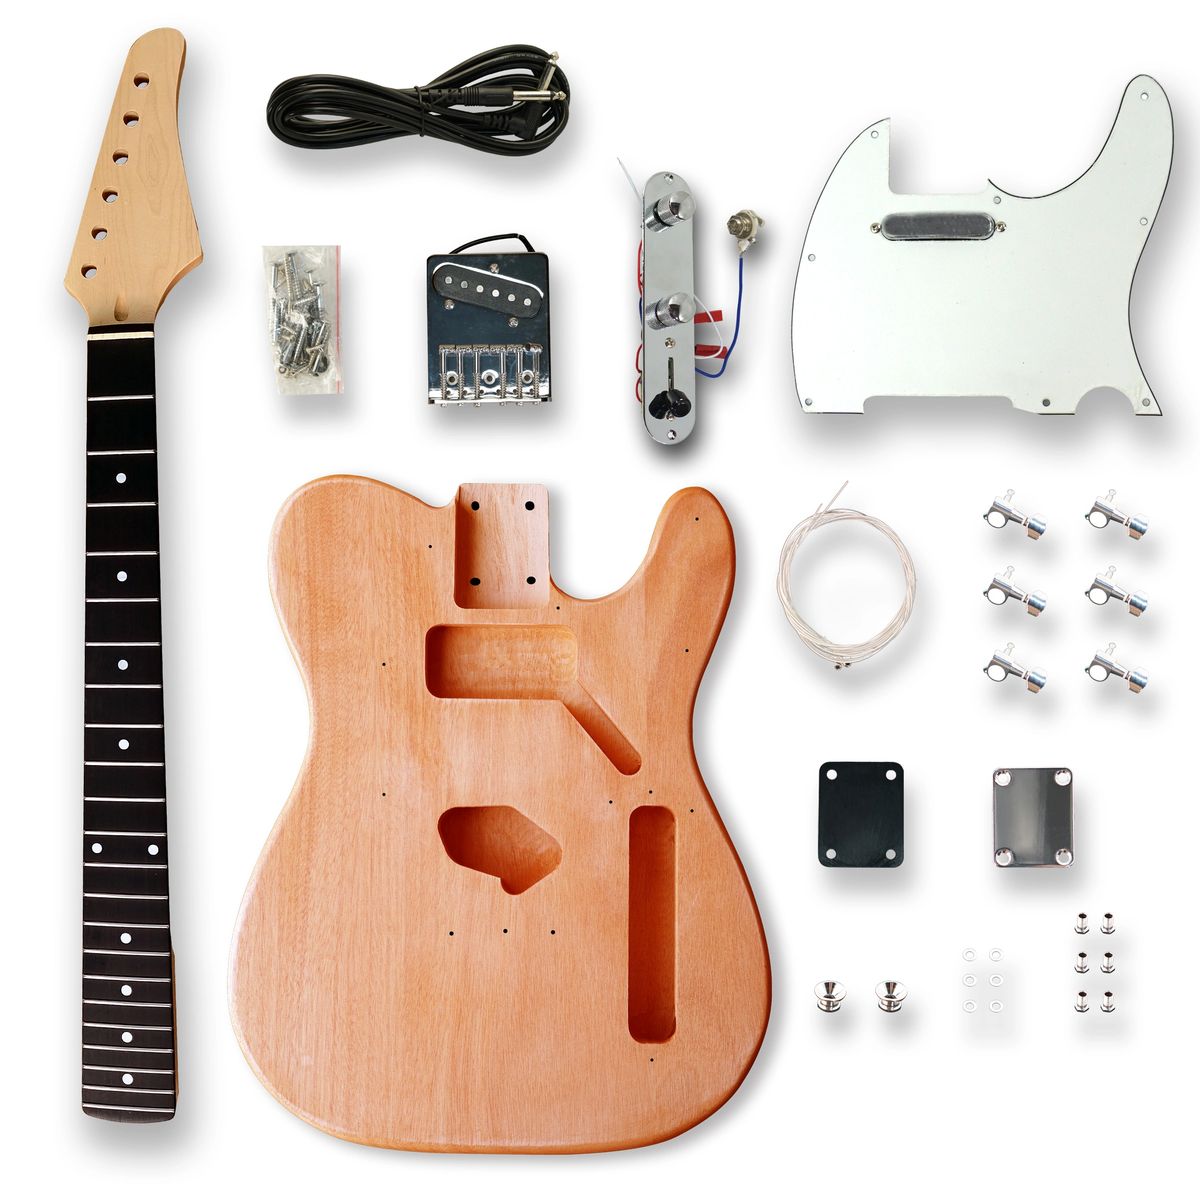 BexGears DIY Electric Kit TL Style Guitar Kits Beginner Kits okoume Body Maple Neck Chrome